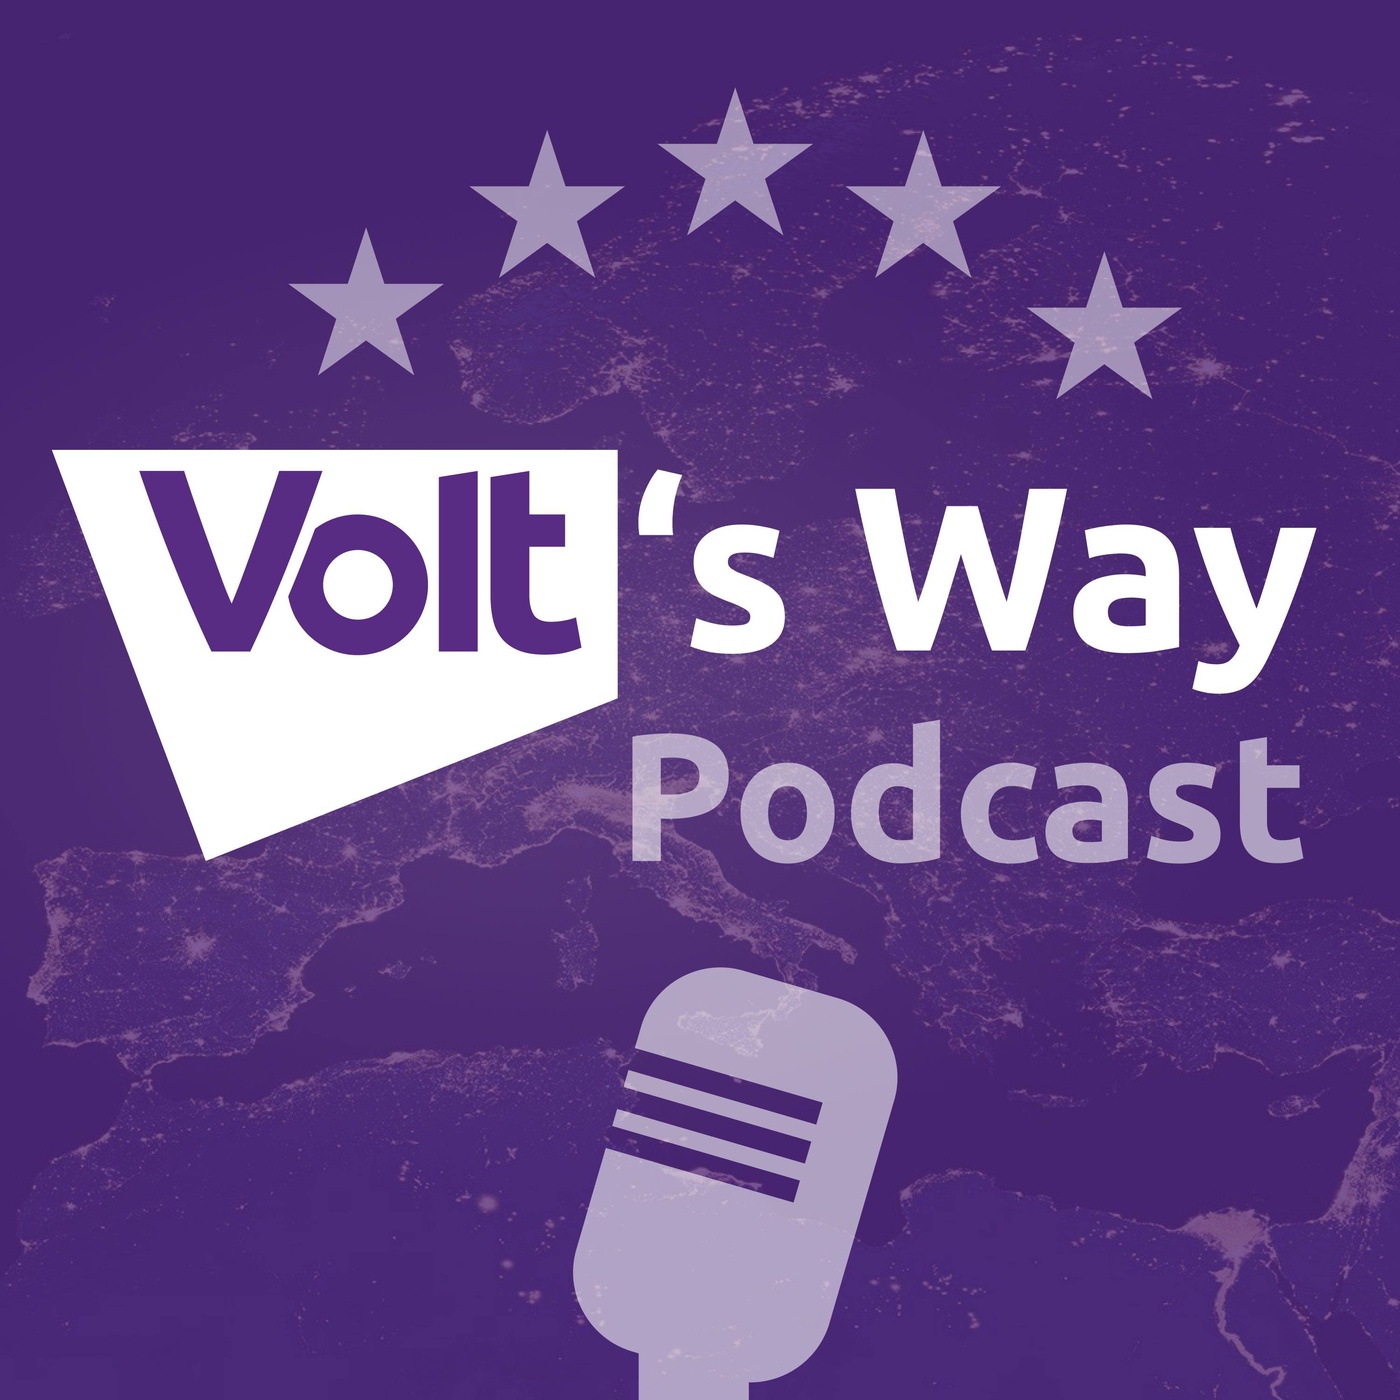 Föderale Republik Europa?! - Ulrike Guérot - Volt's Way - Unser Europa Podcast - 3.05